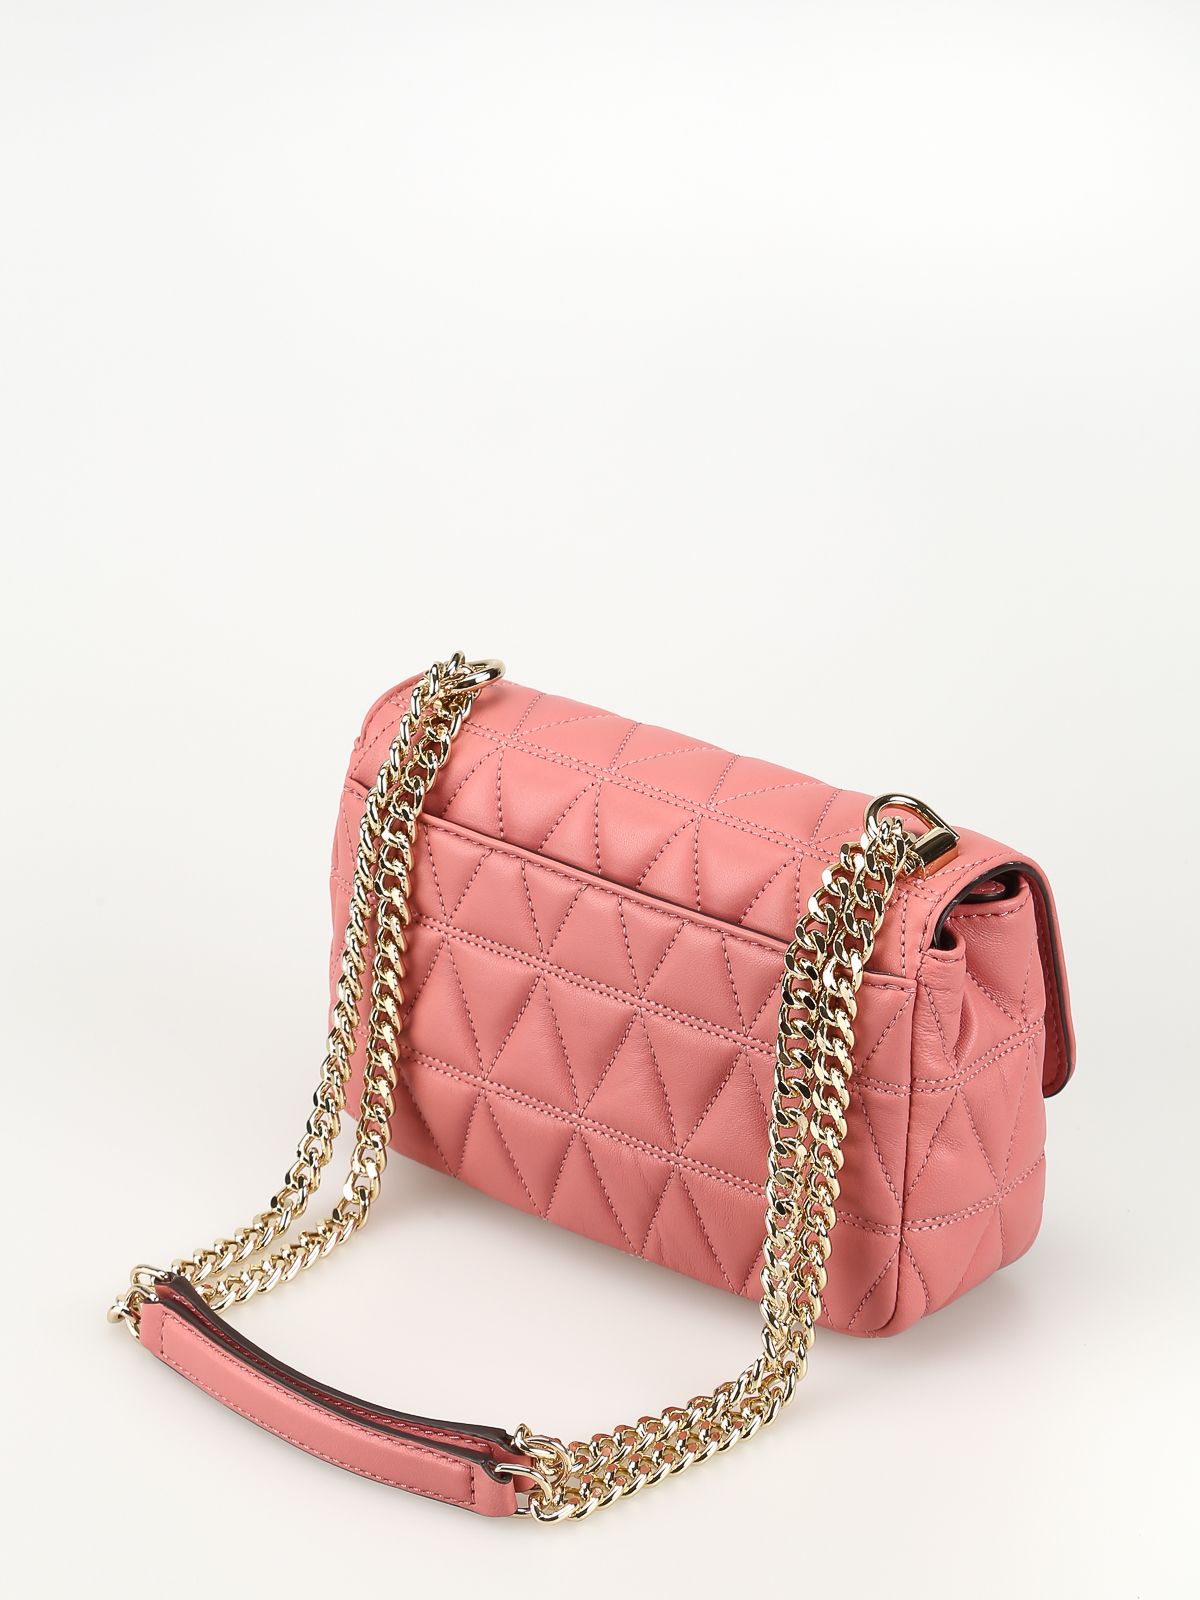 Sloan pink quilted small shoulder bag 